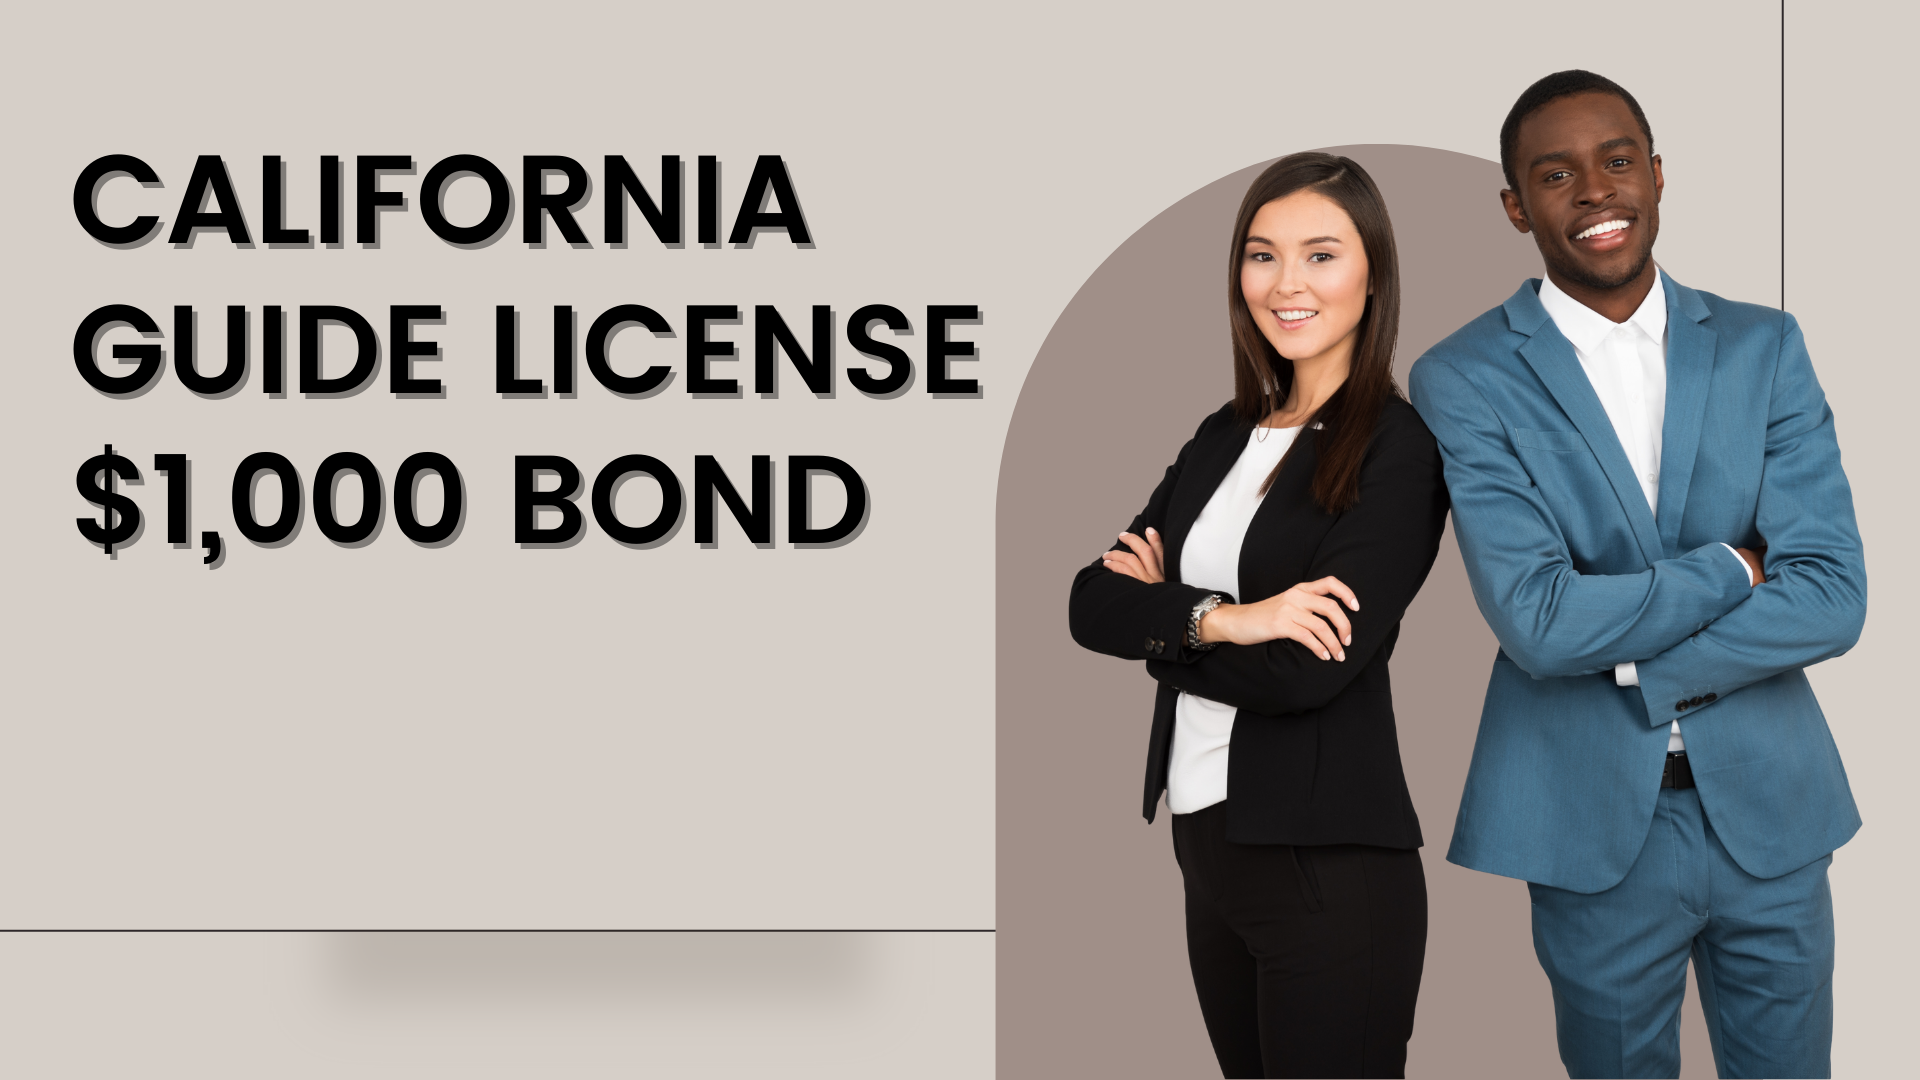 Surety Bond-California Guide License $1,000 Bond